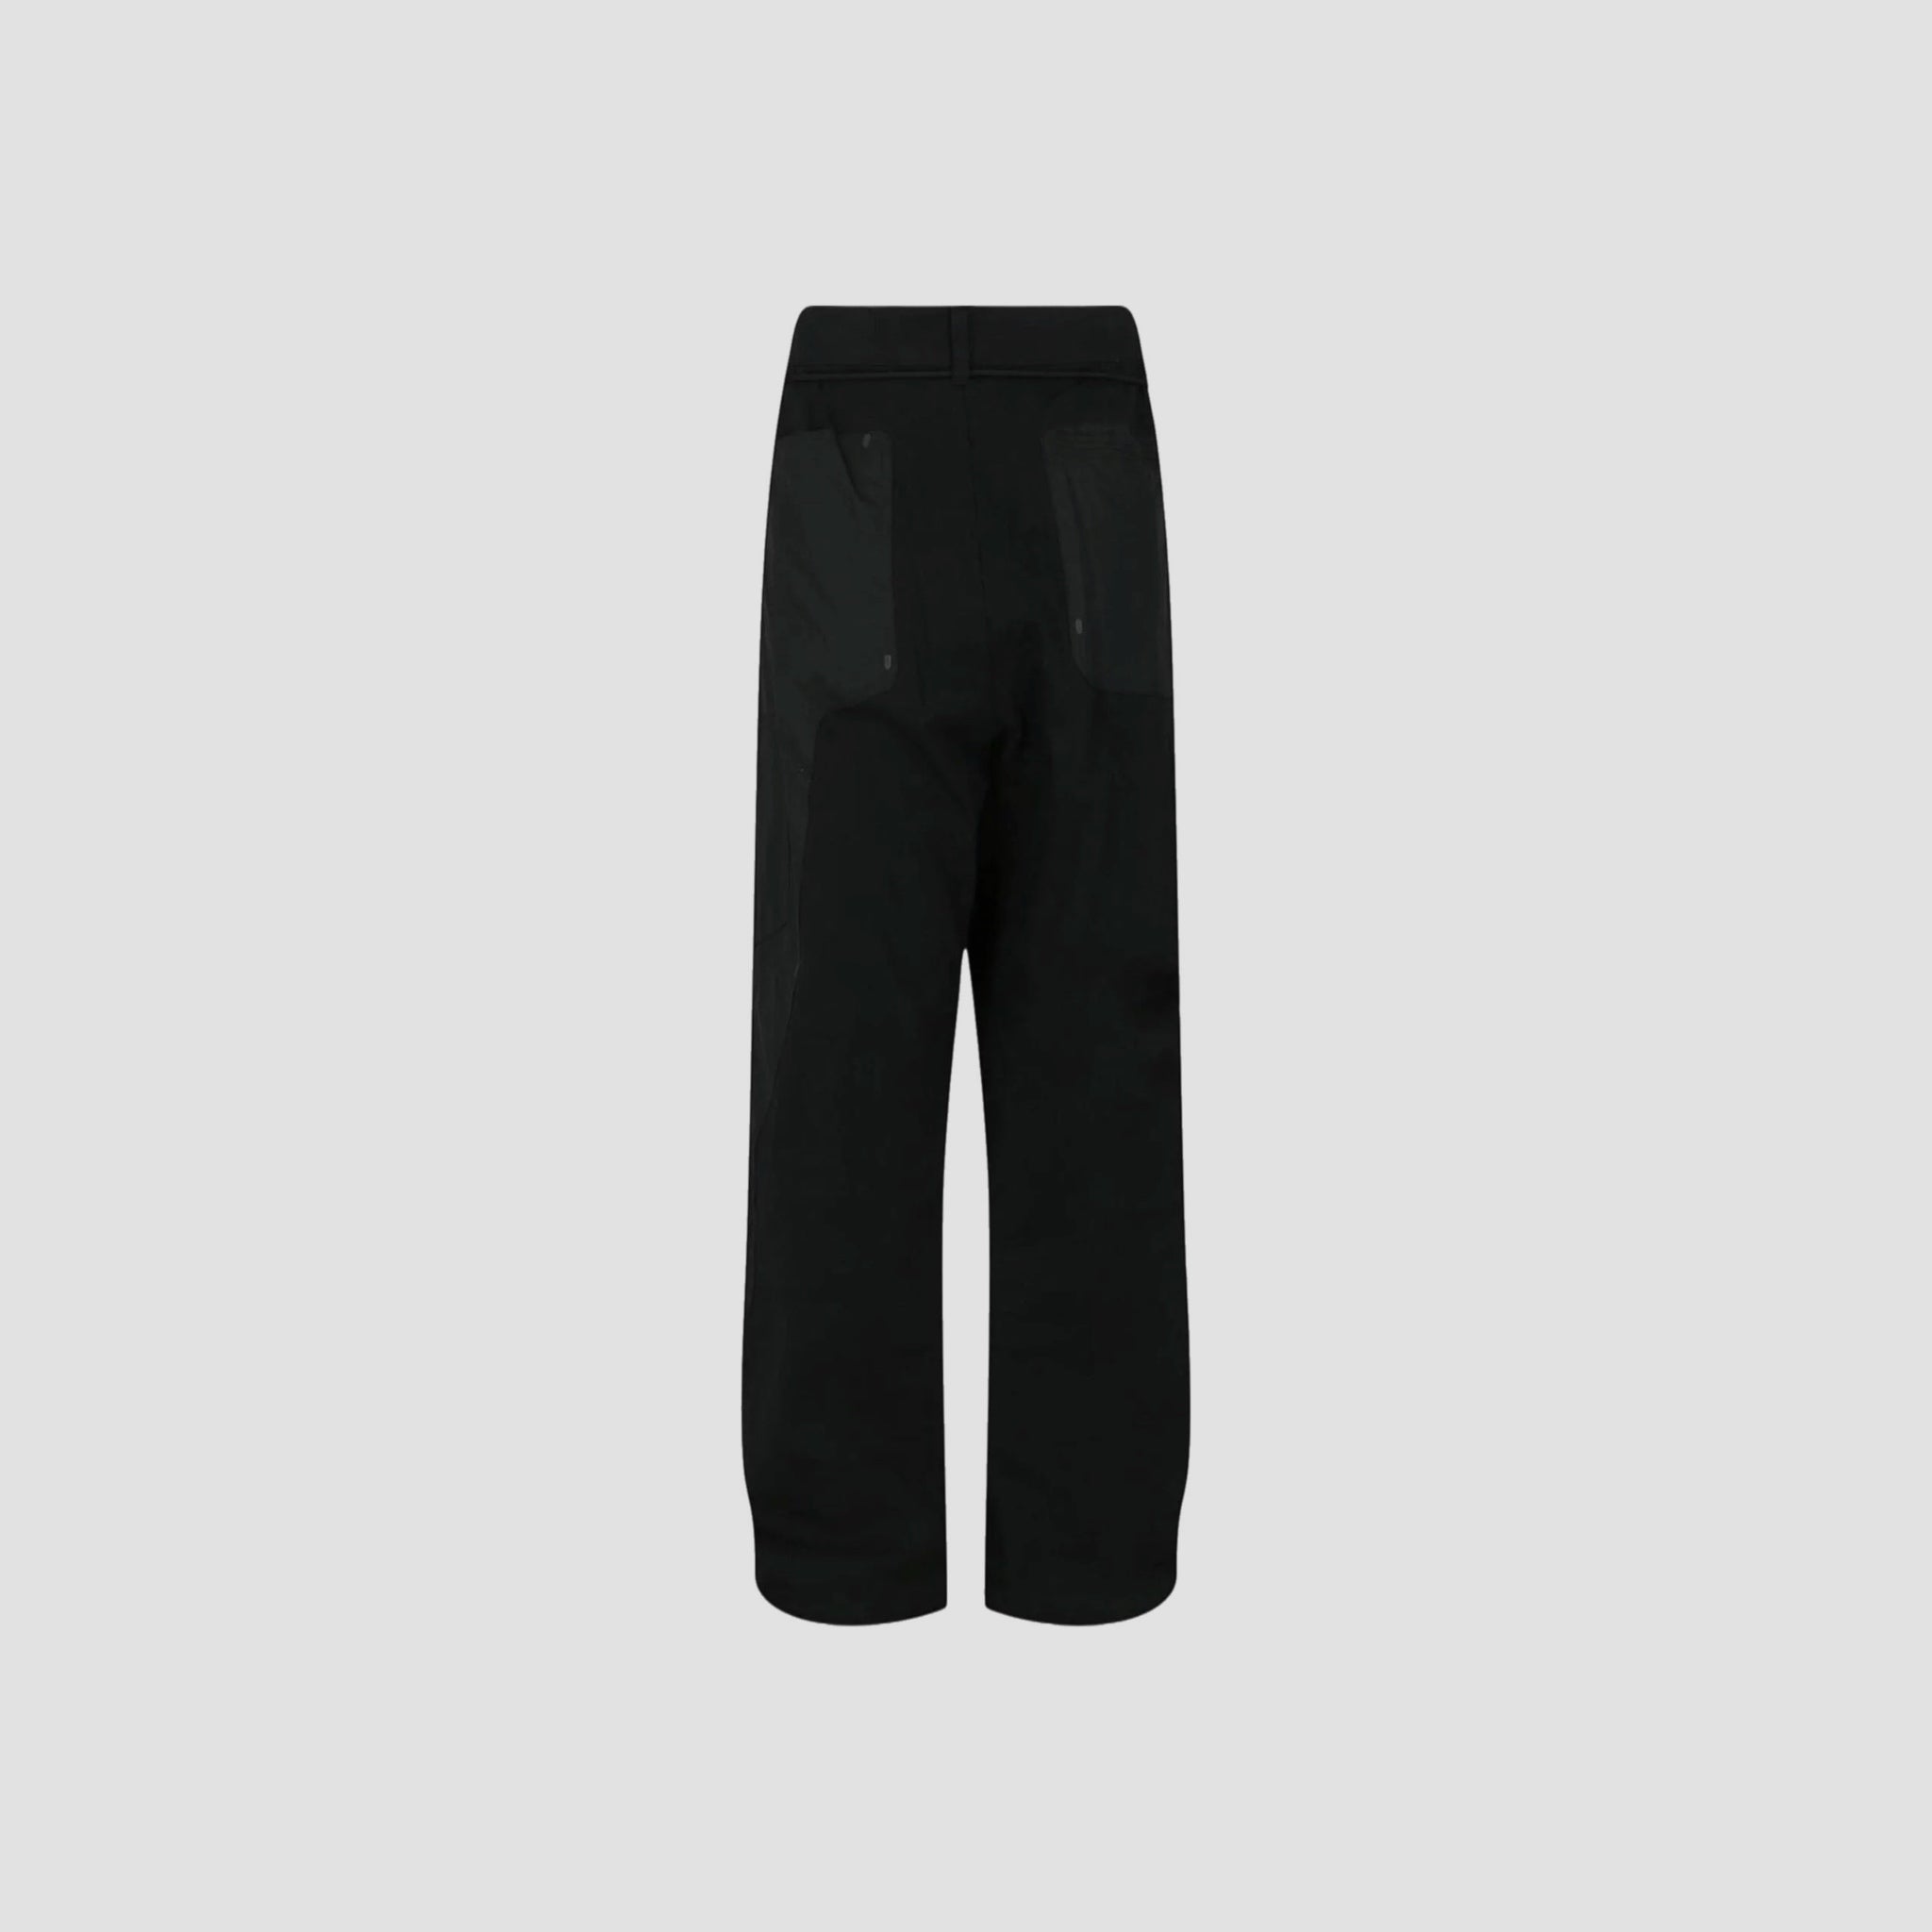 Off-White X Nike Techno Fabric Track Pants / Cargos